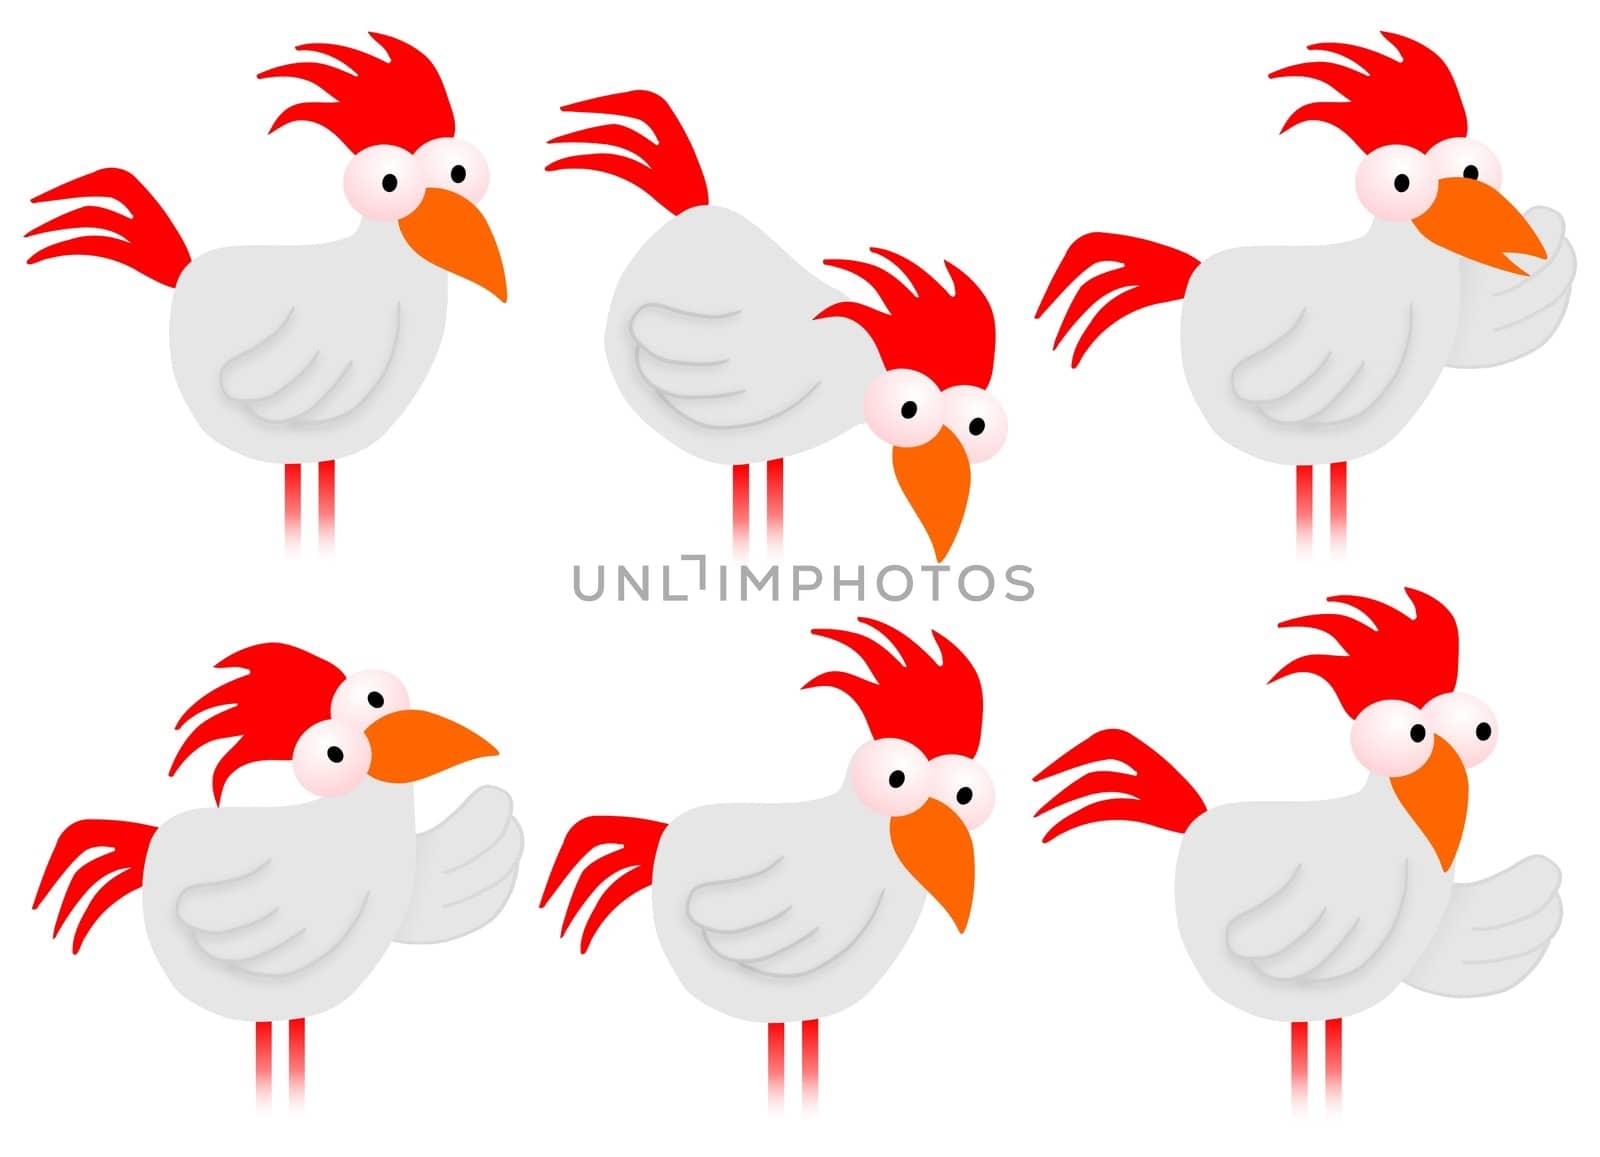 Chicken Poses by darrenwhittingham